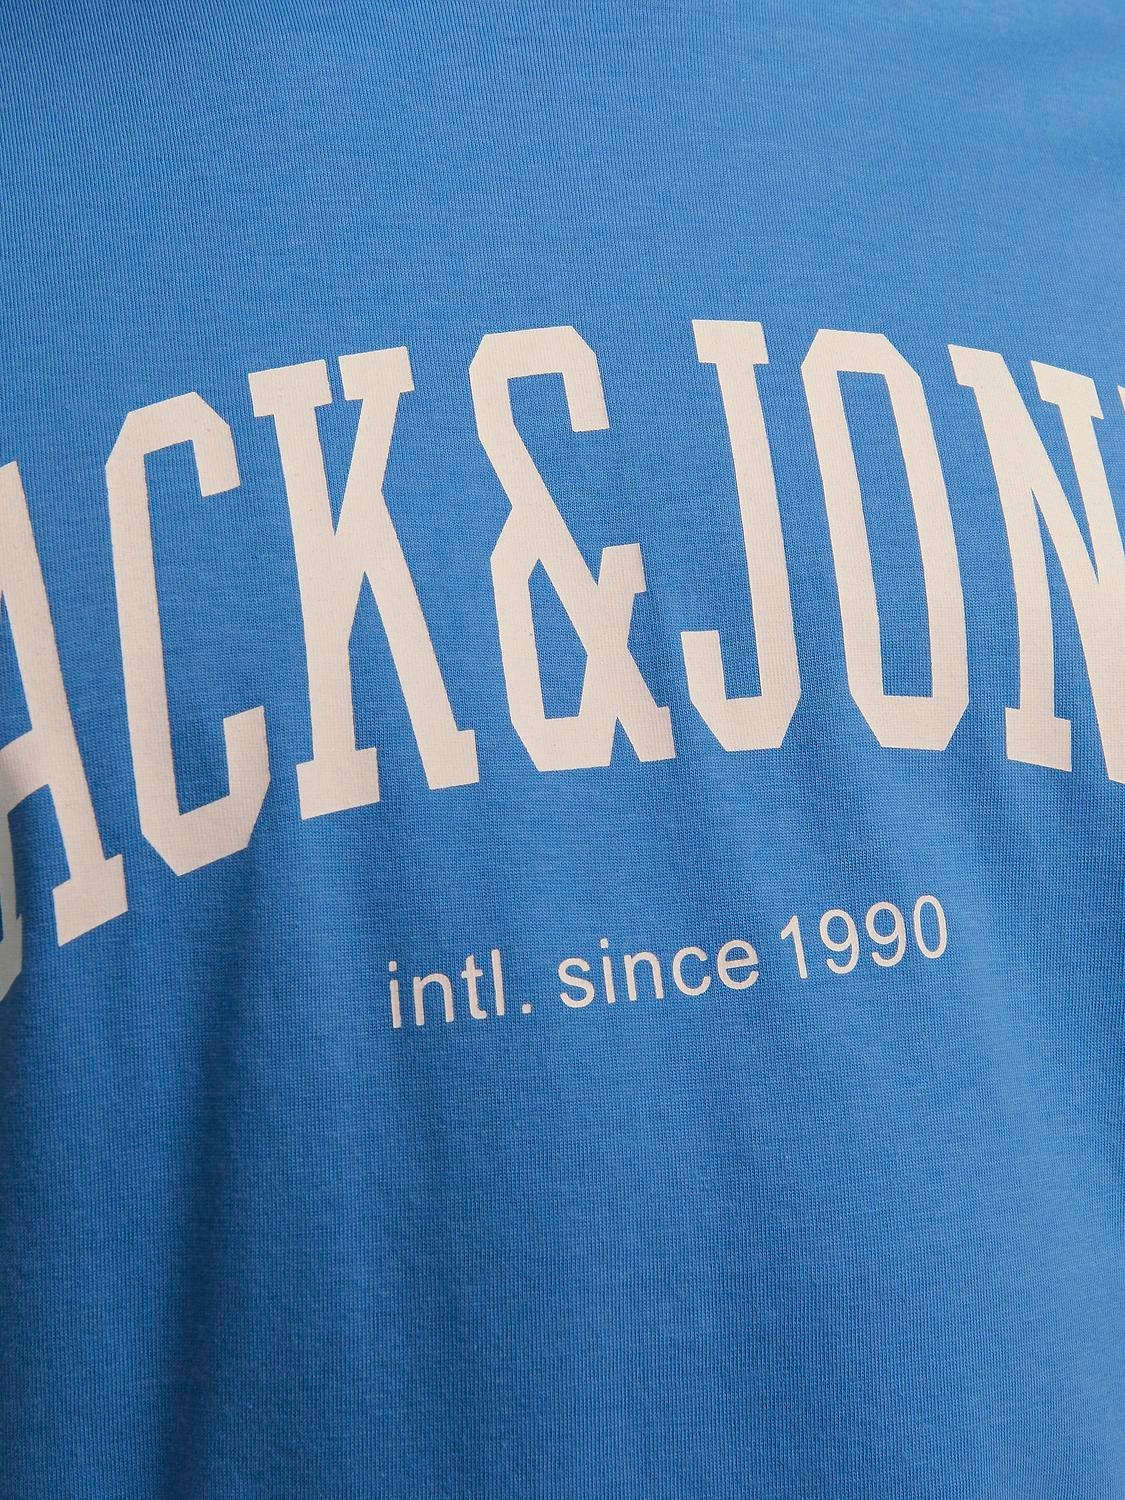 Jack & Jones Camiseta Logotipo Cuello redondo -Pacific Coast - 12236514